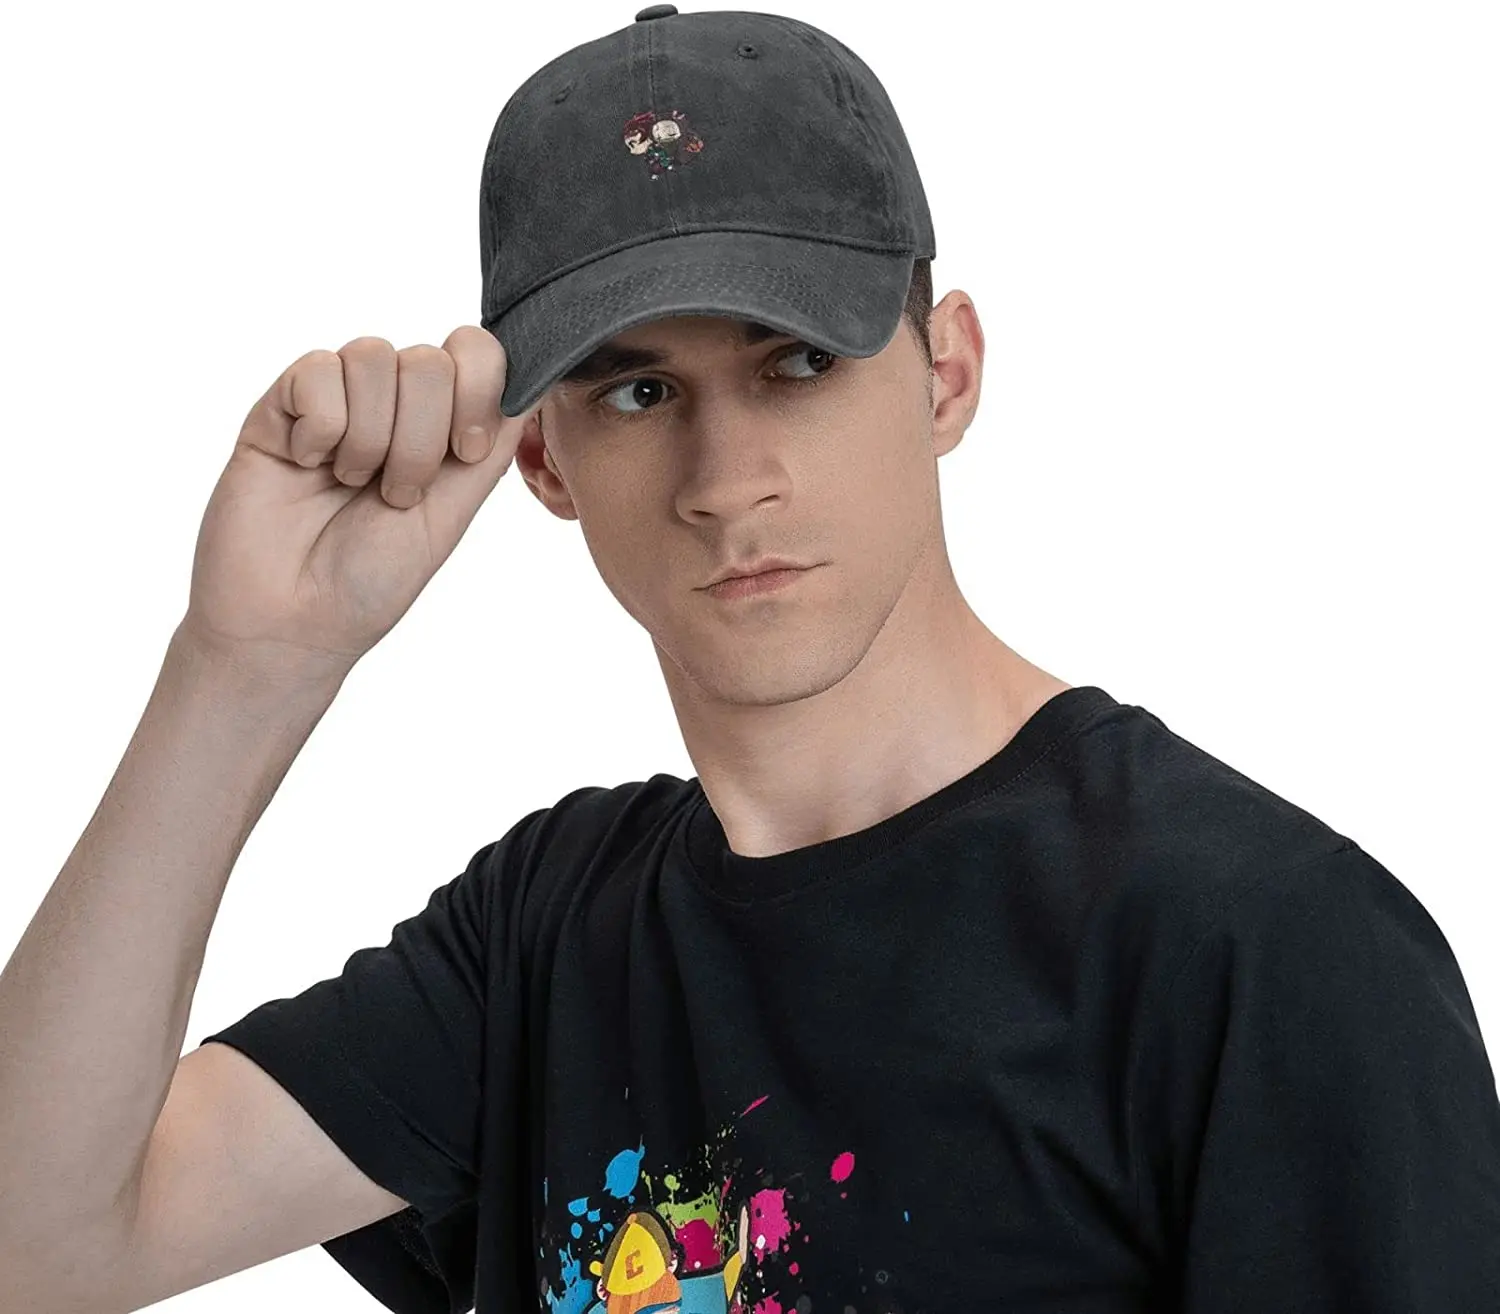 Japan Anime Hat for Adult Adjustable Baseball Cap Low Profile Washed Cotton Denim Caps for Men Women Dad Hats Snapback Cap